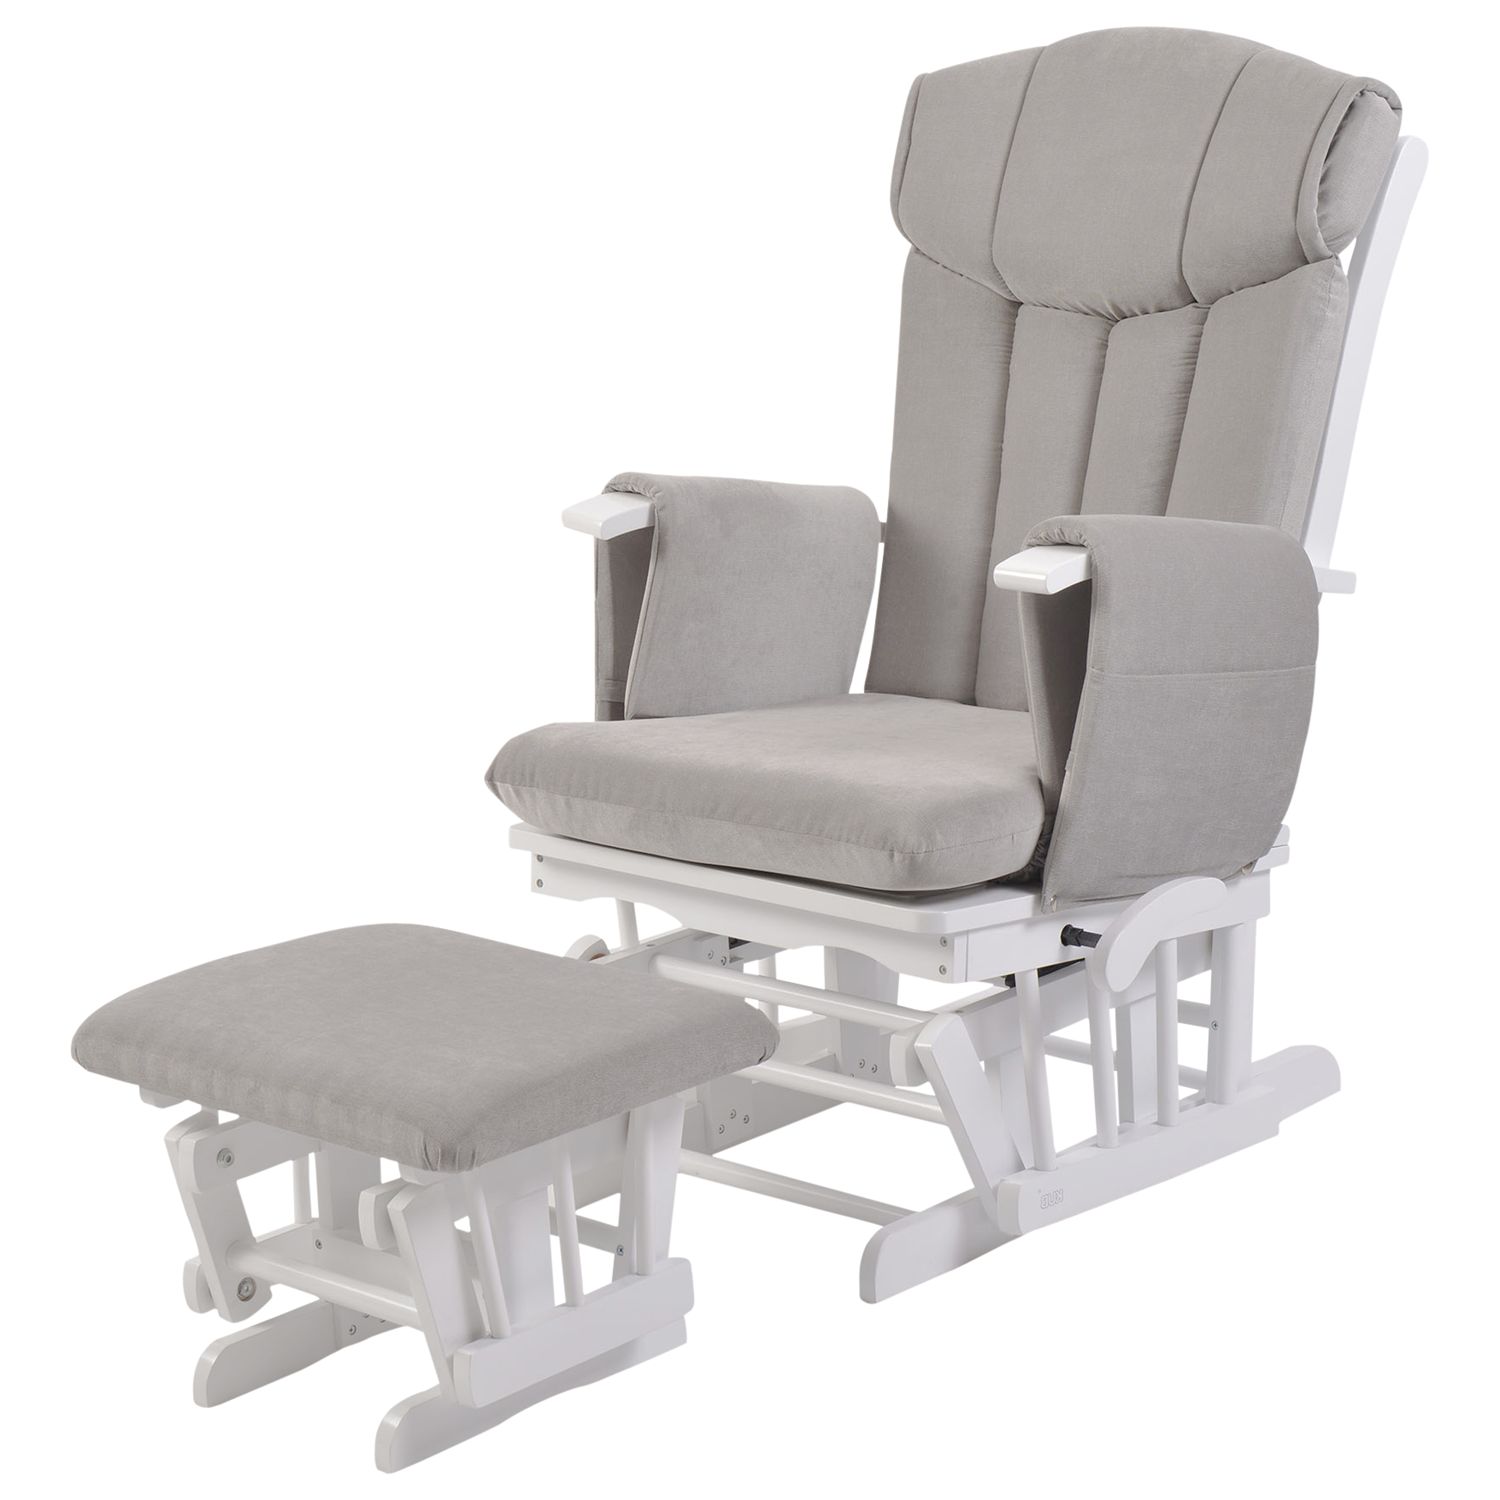 Kub Chatsworth Glider Nursing Chair and 